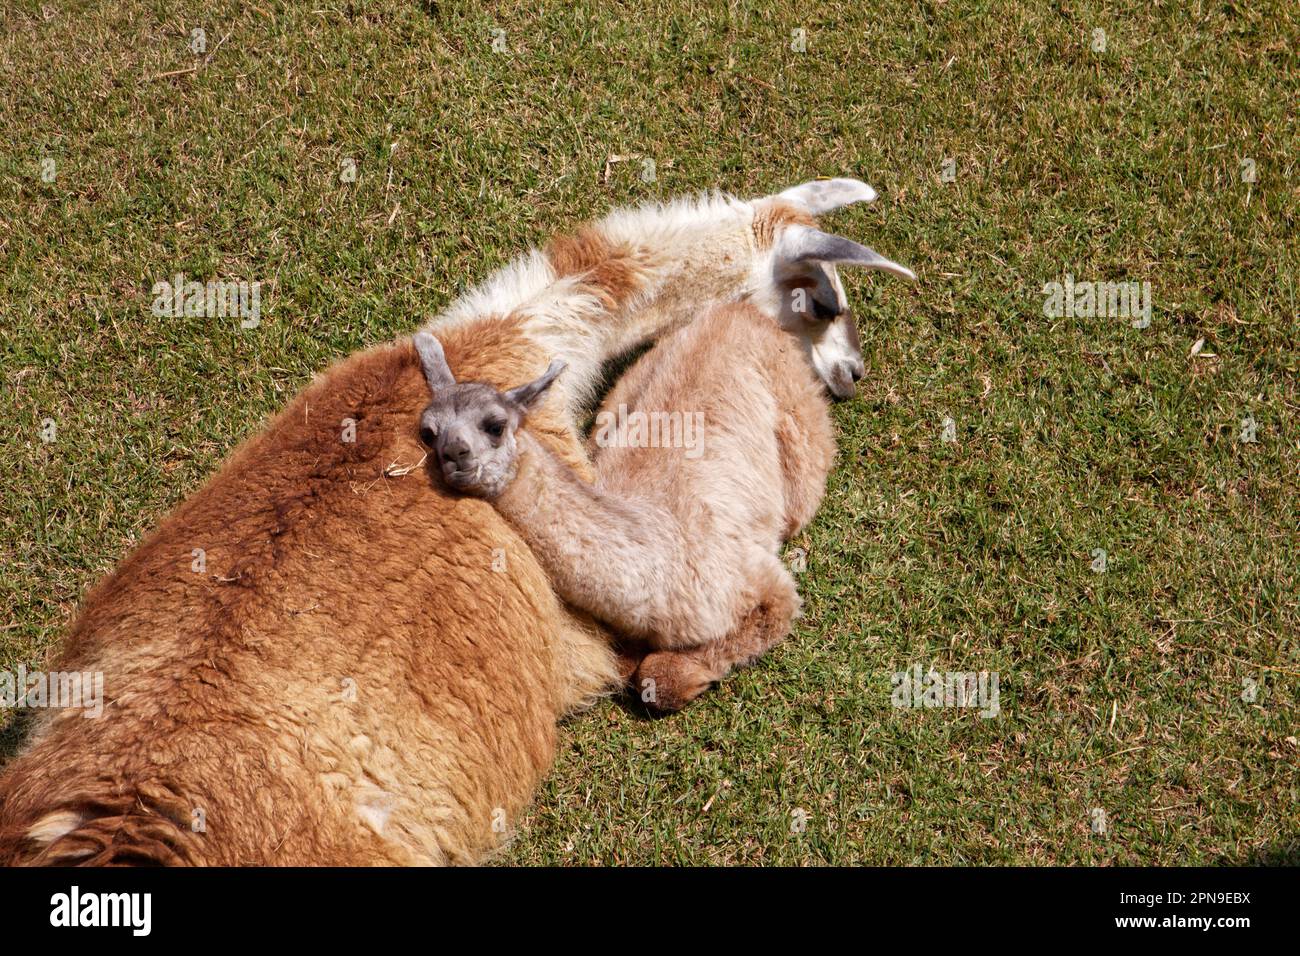 A llama and its baby (cria) lying on the grass inside Machu Picchu, Cusco Department, Peru Stock Photo